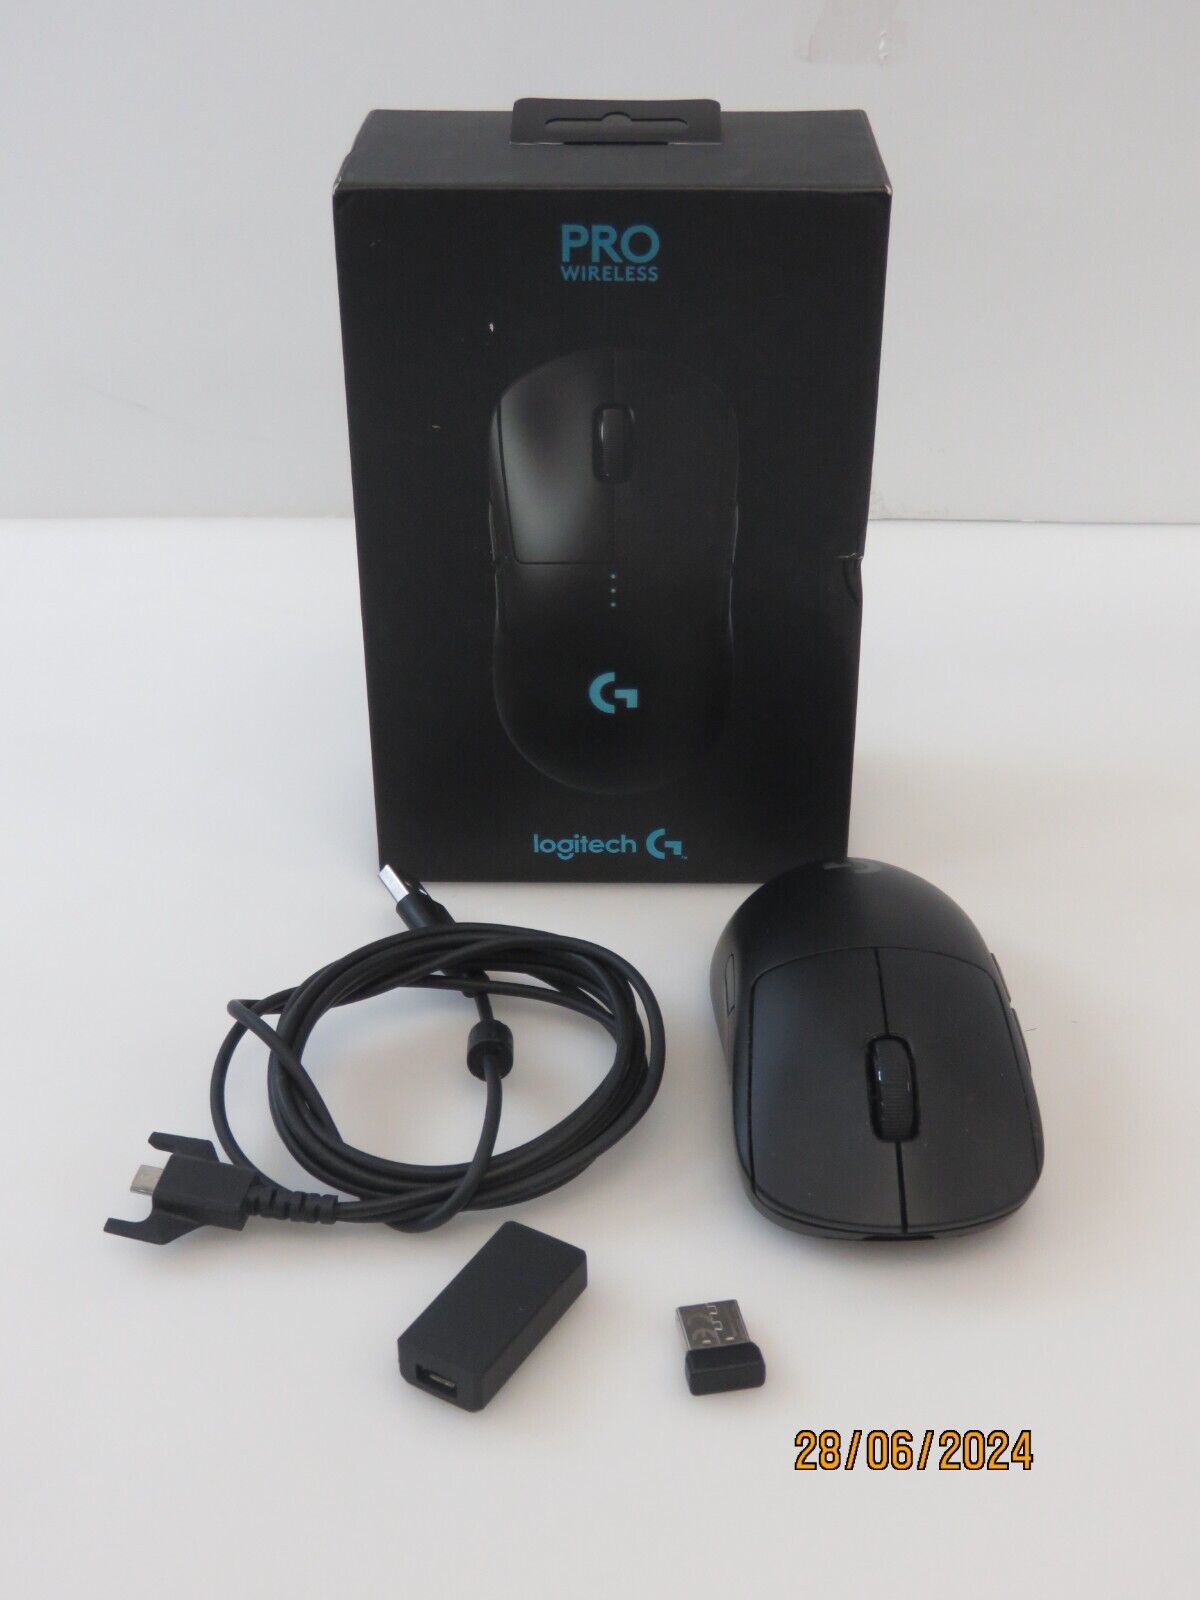 Logitech G Pro Wireless Gaming Mouse With eSPORTS Grade Performance [U147]